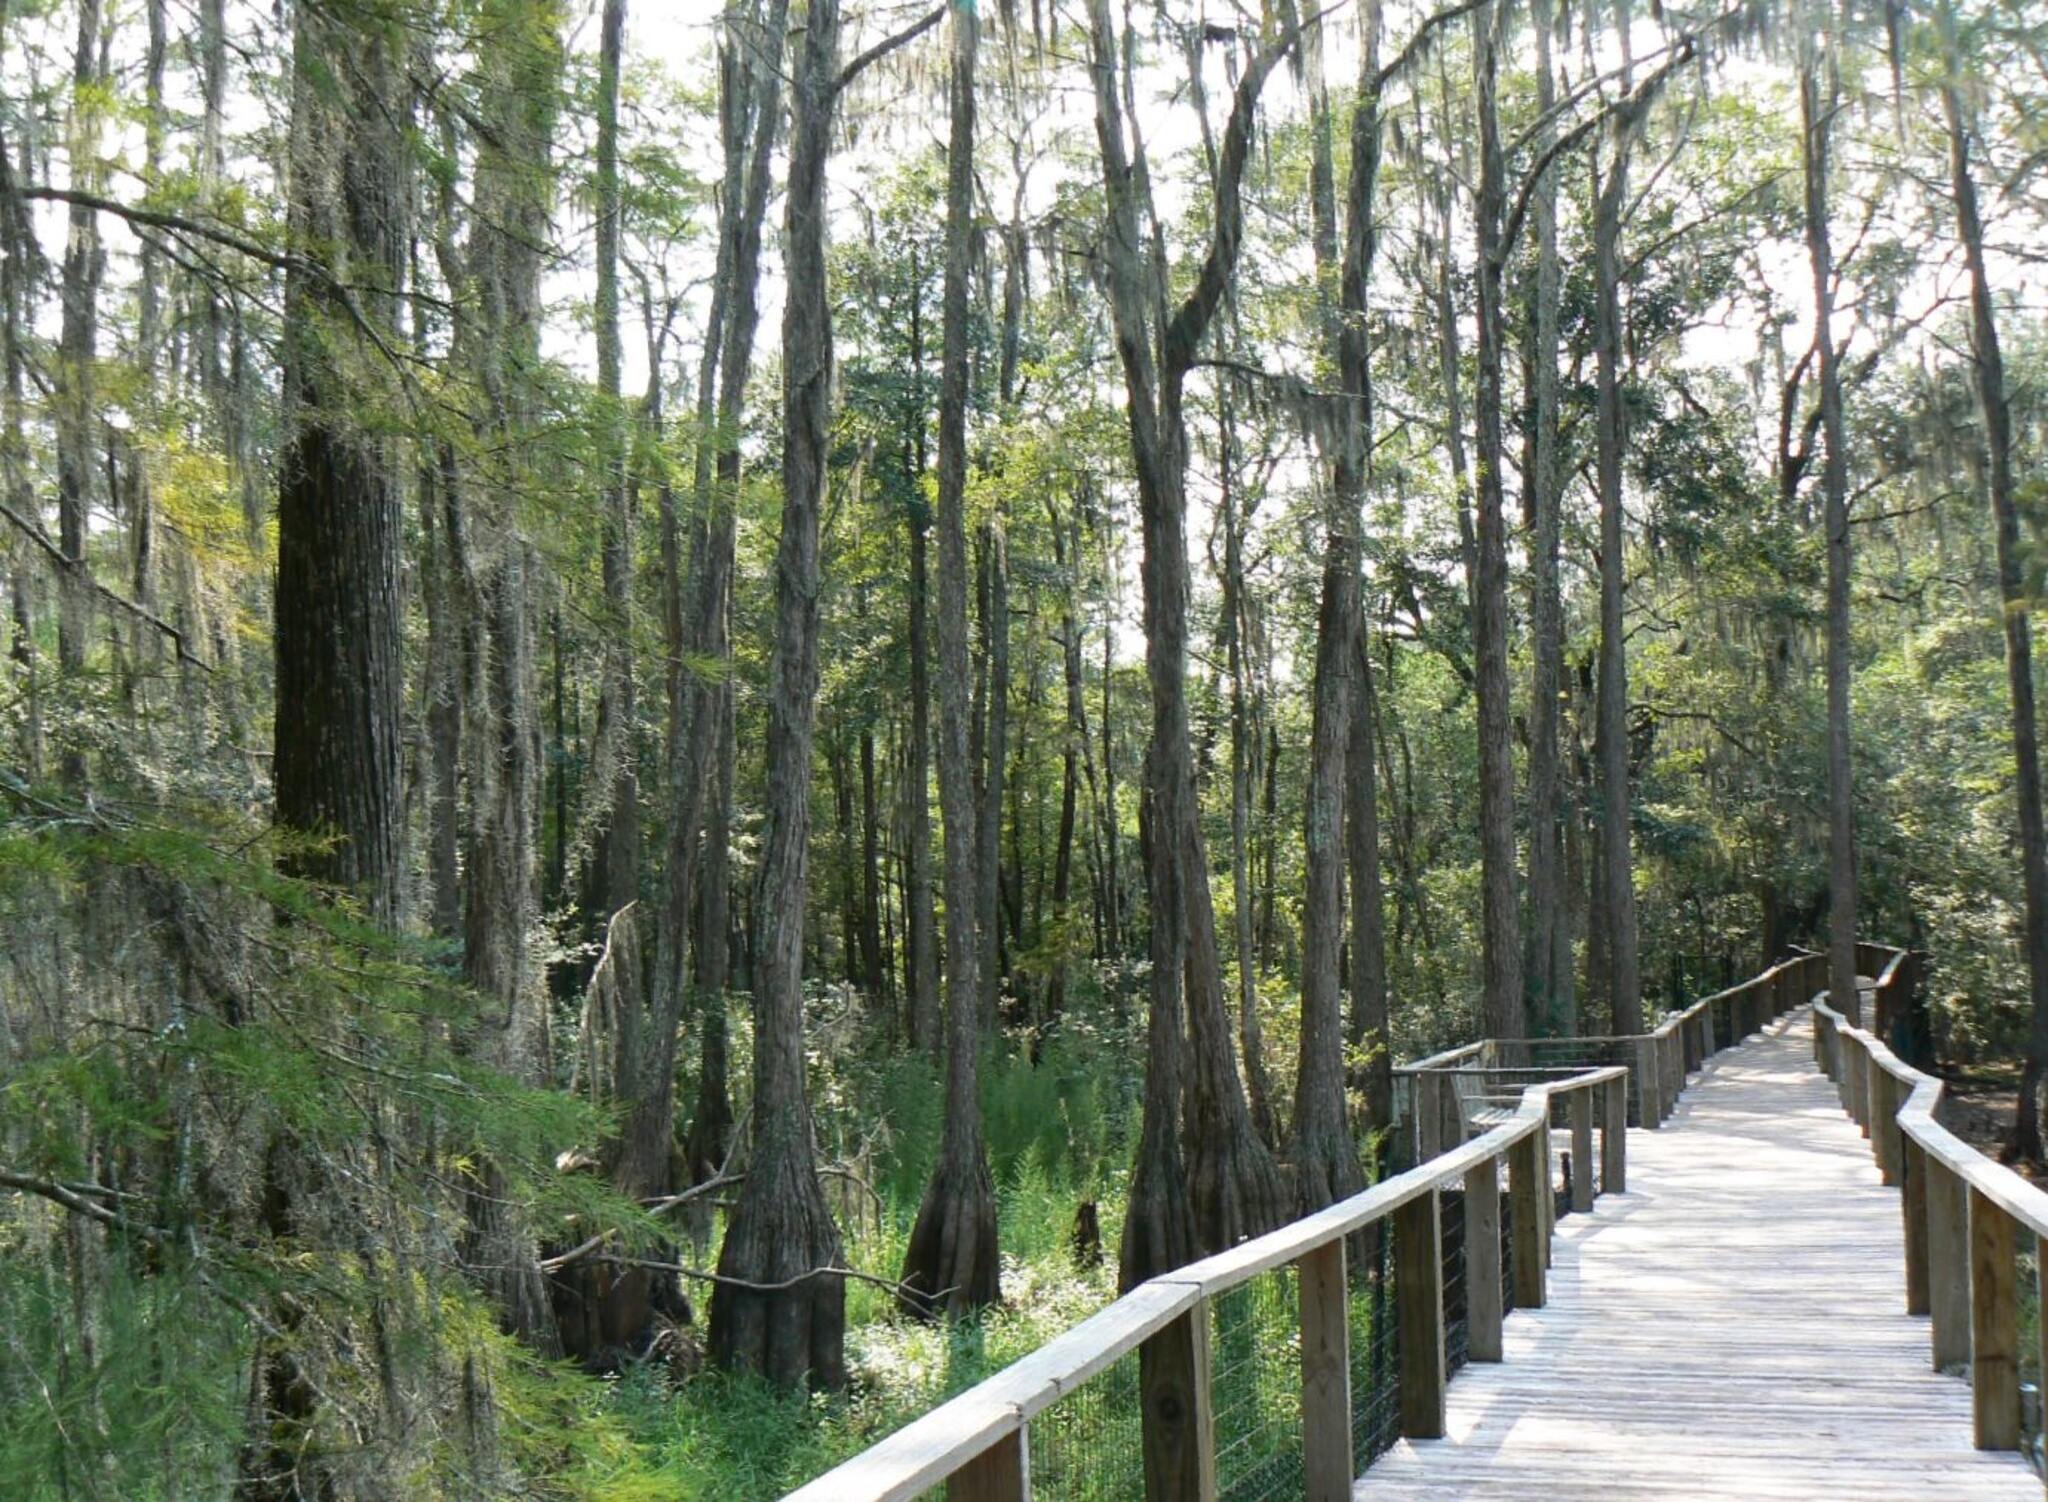 A boardwalk over Bald Cypress (Taxodium distichum) swamp forest habitat.